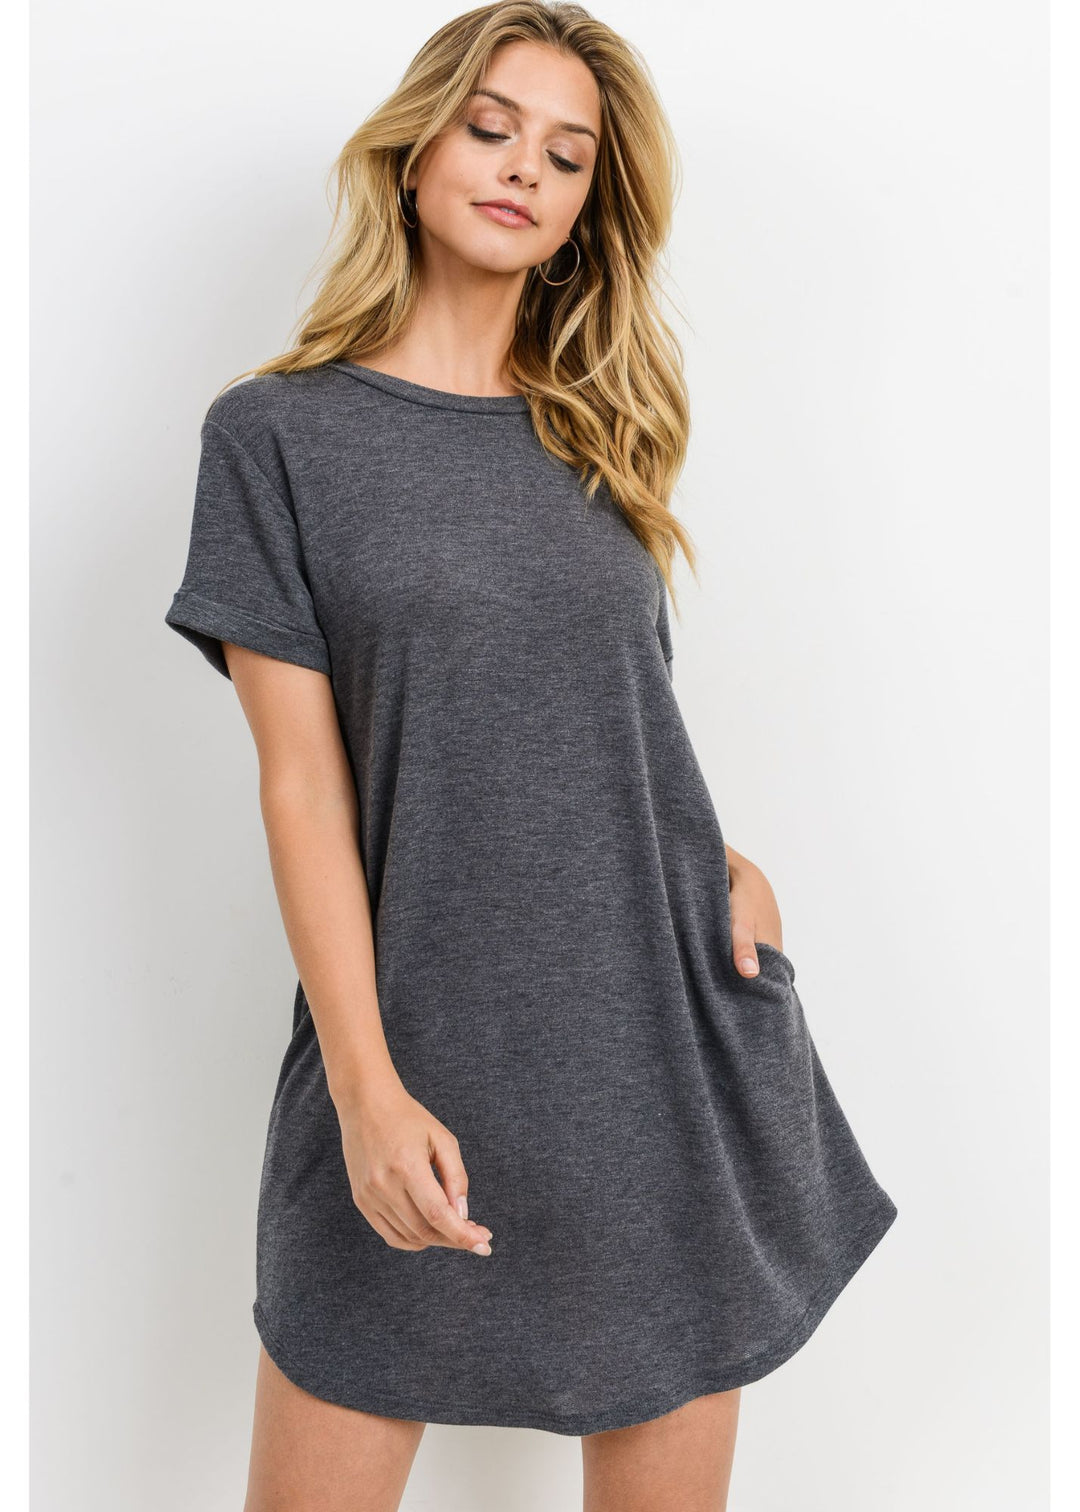 Cherish T-Shirt Dress (Charcoal)